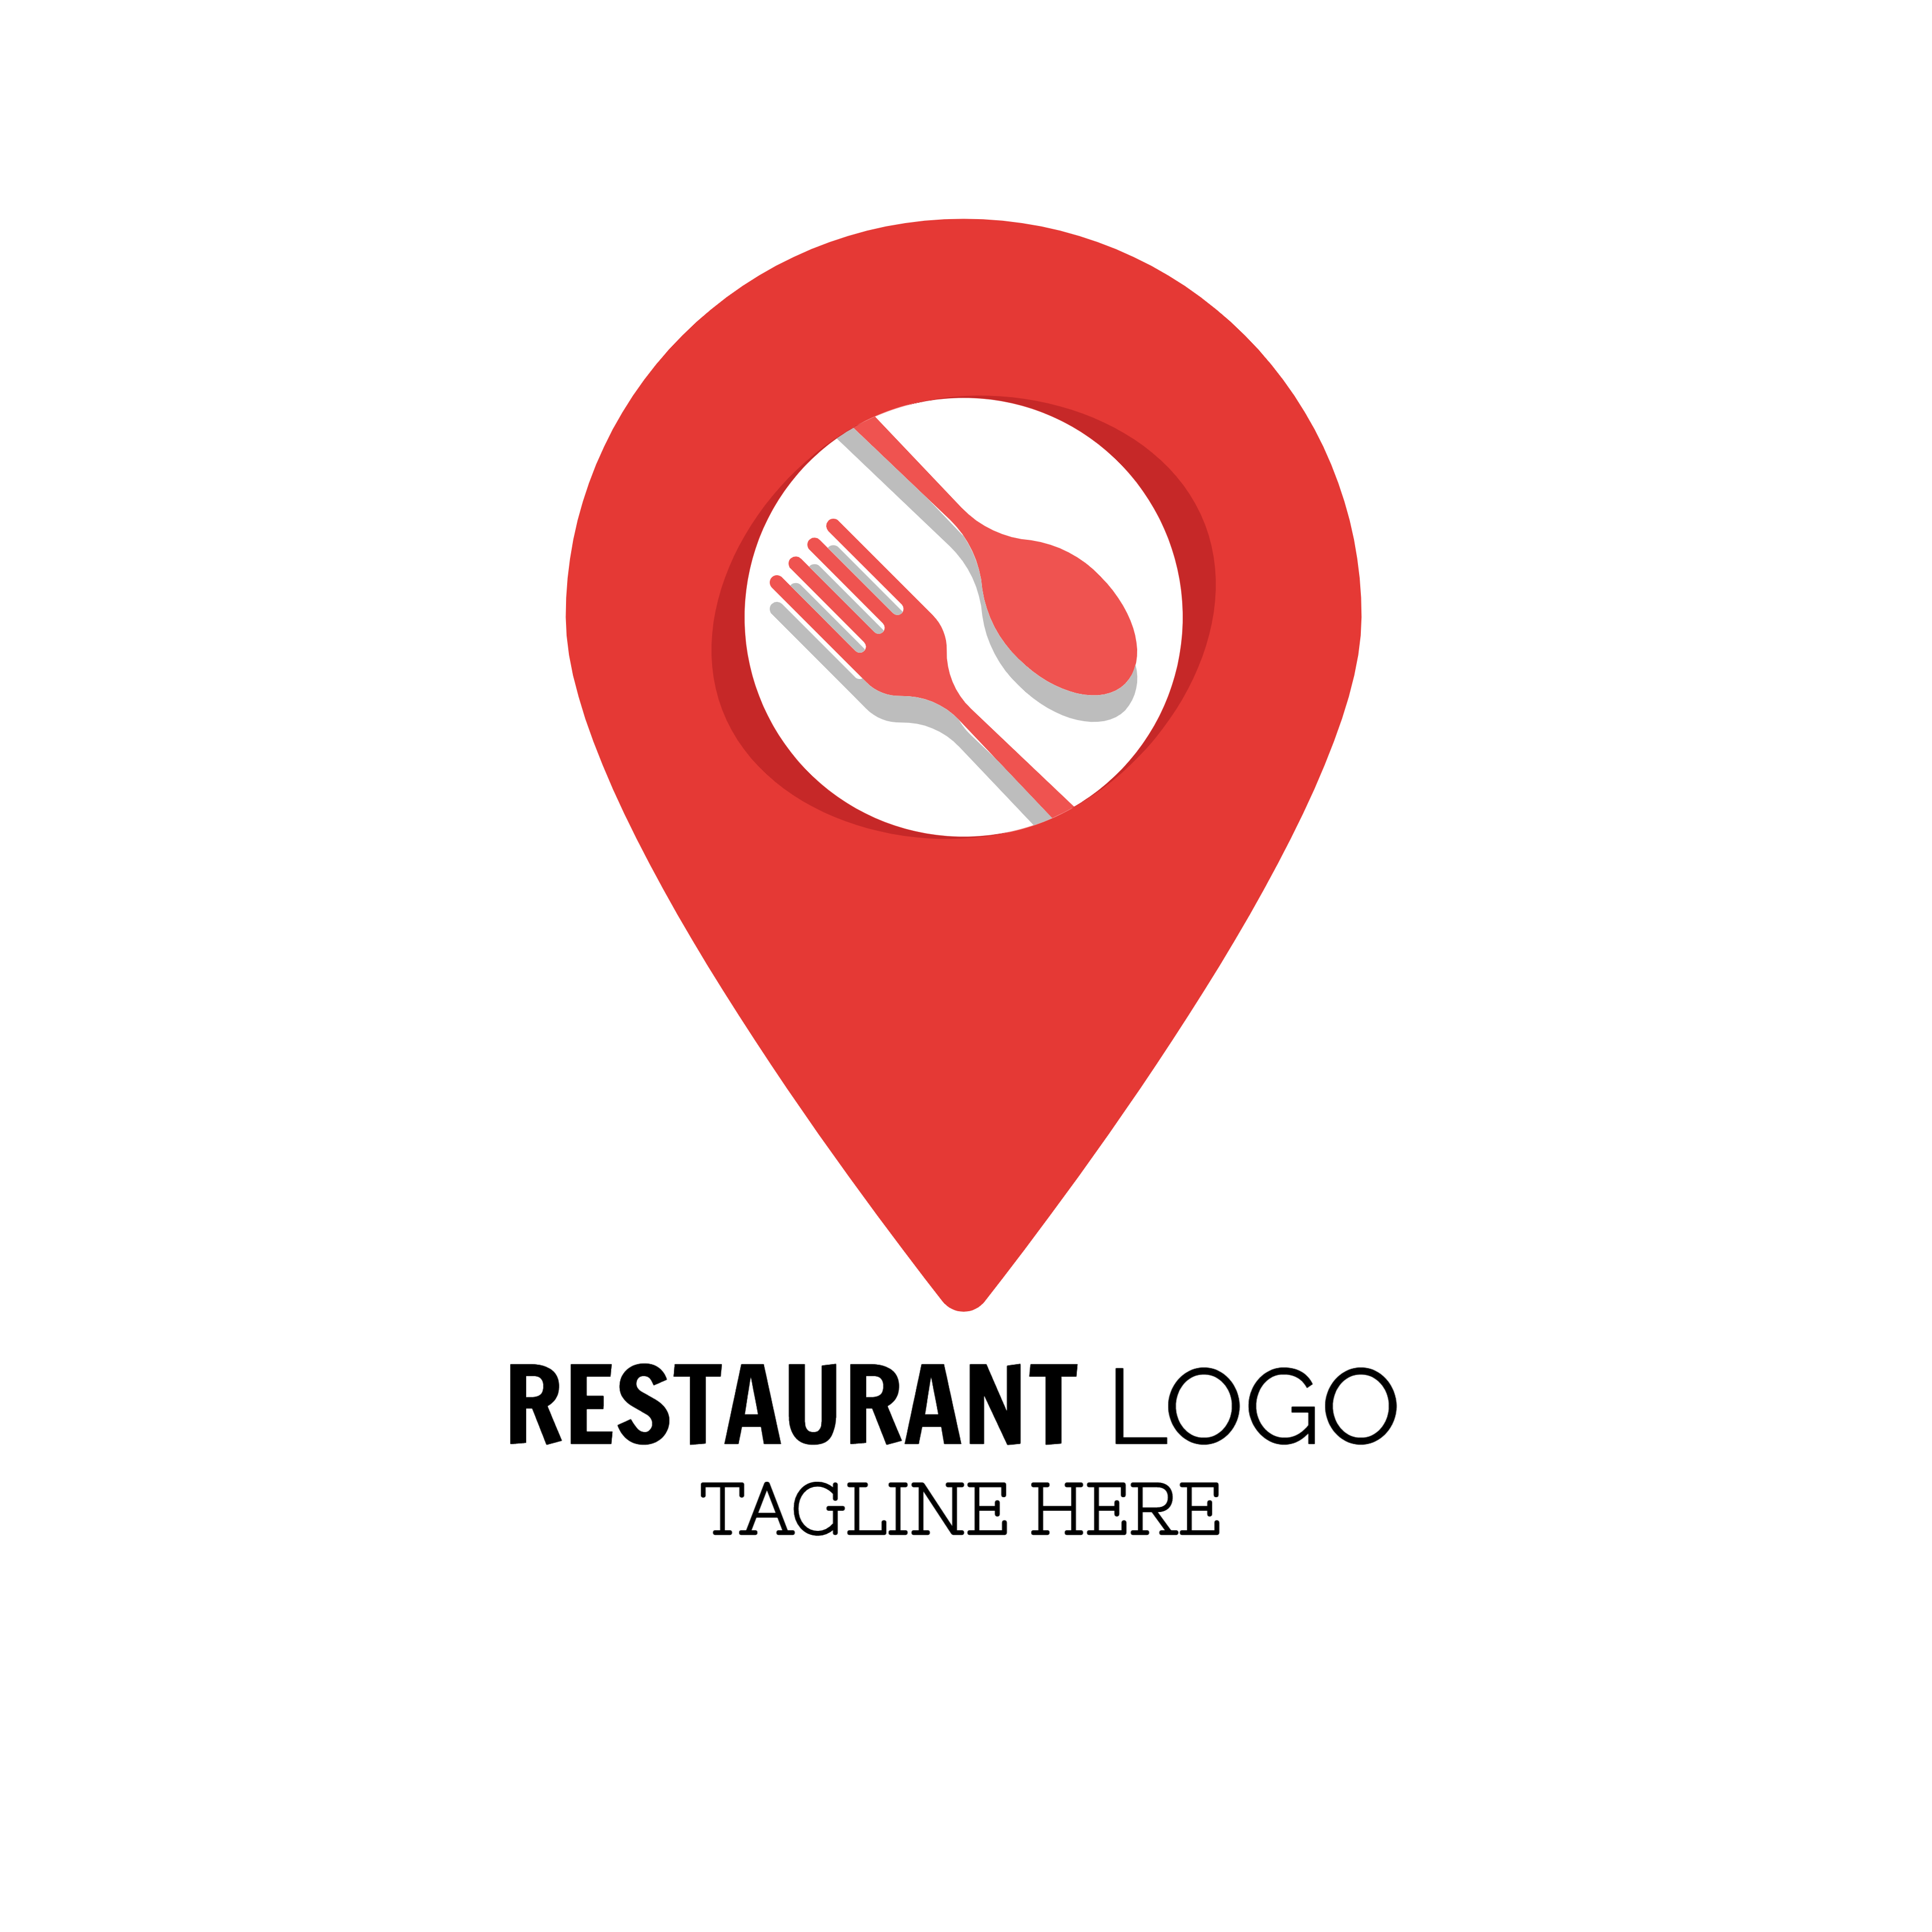 Restarant Logo - Latest Restaurant Food Logo Template. Free Digital Designs On Bk